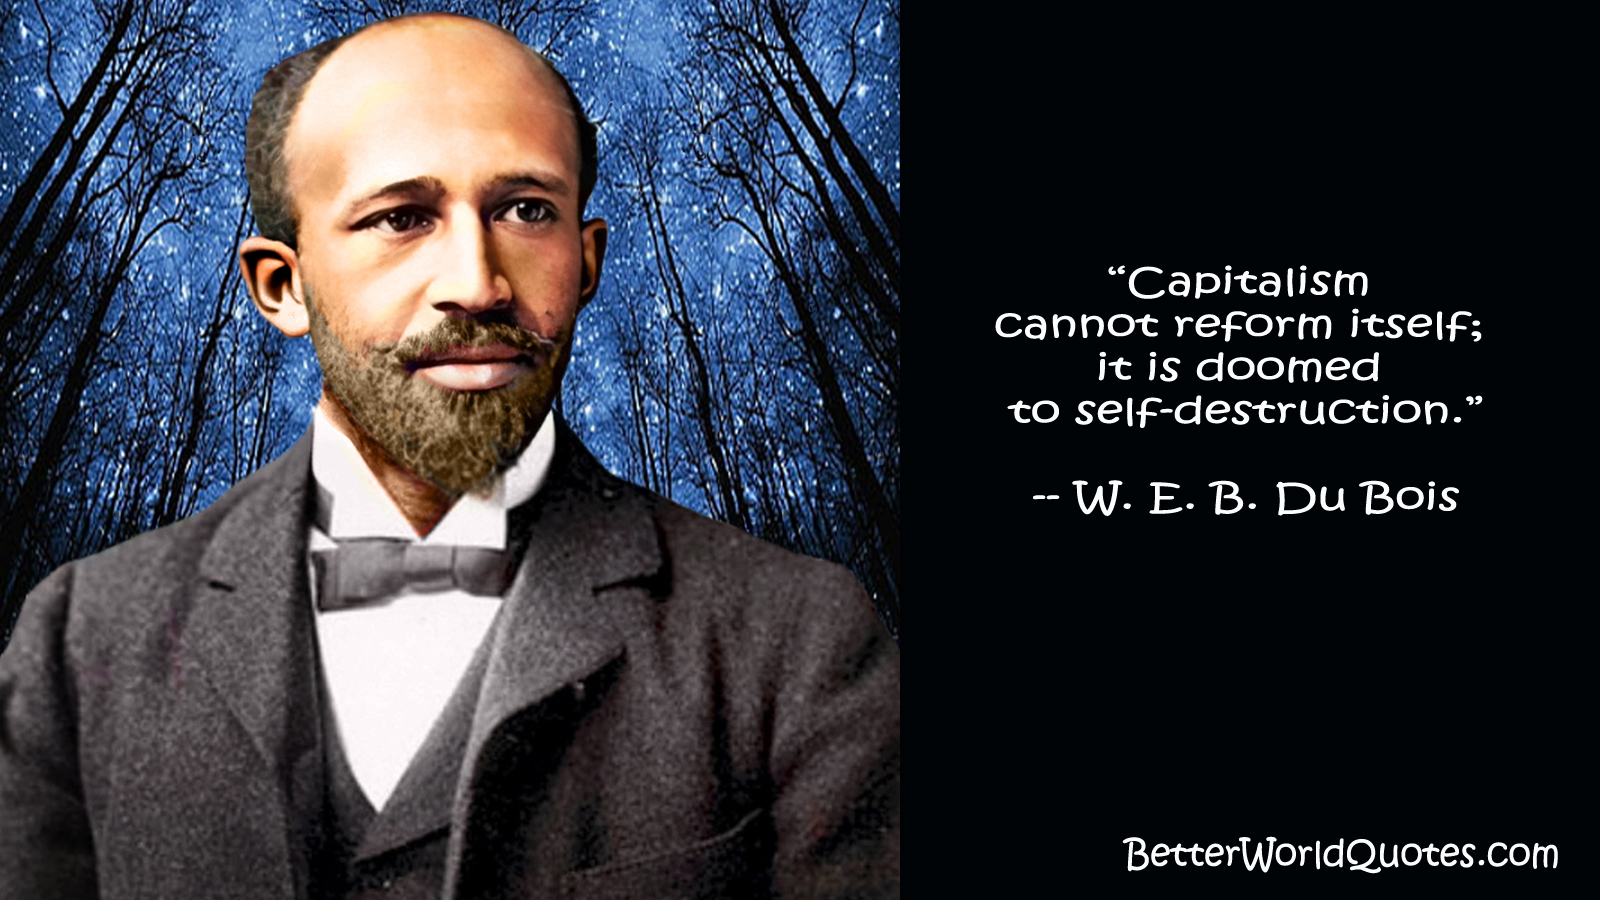 W. E. B. Du Bois: Capitalism cannot reform itself; it is doomed to self-destruction.